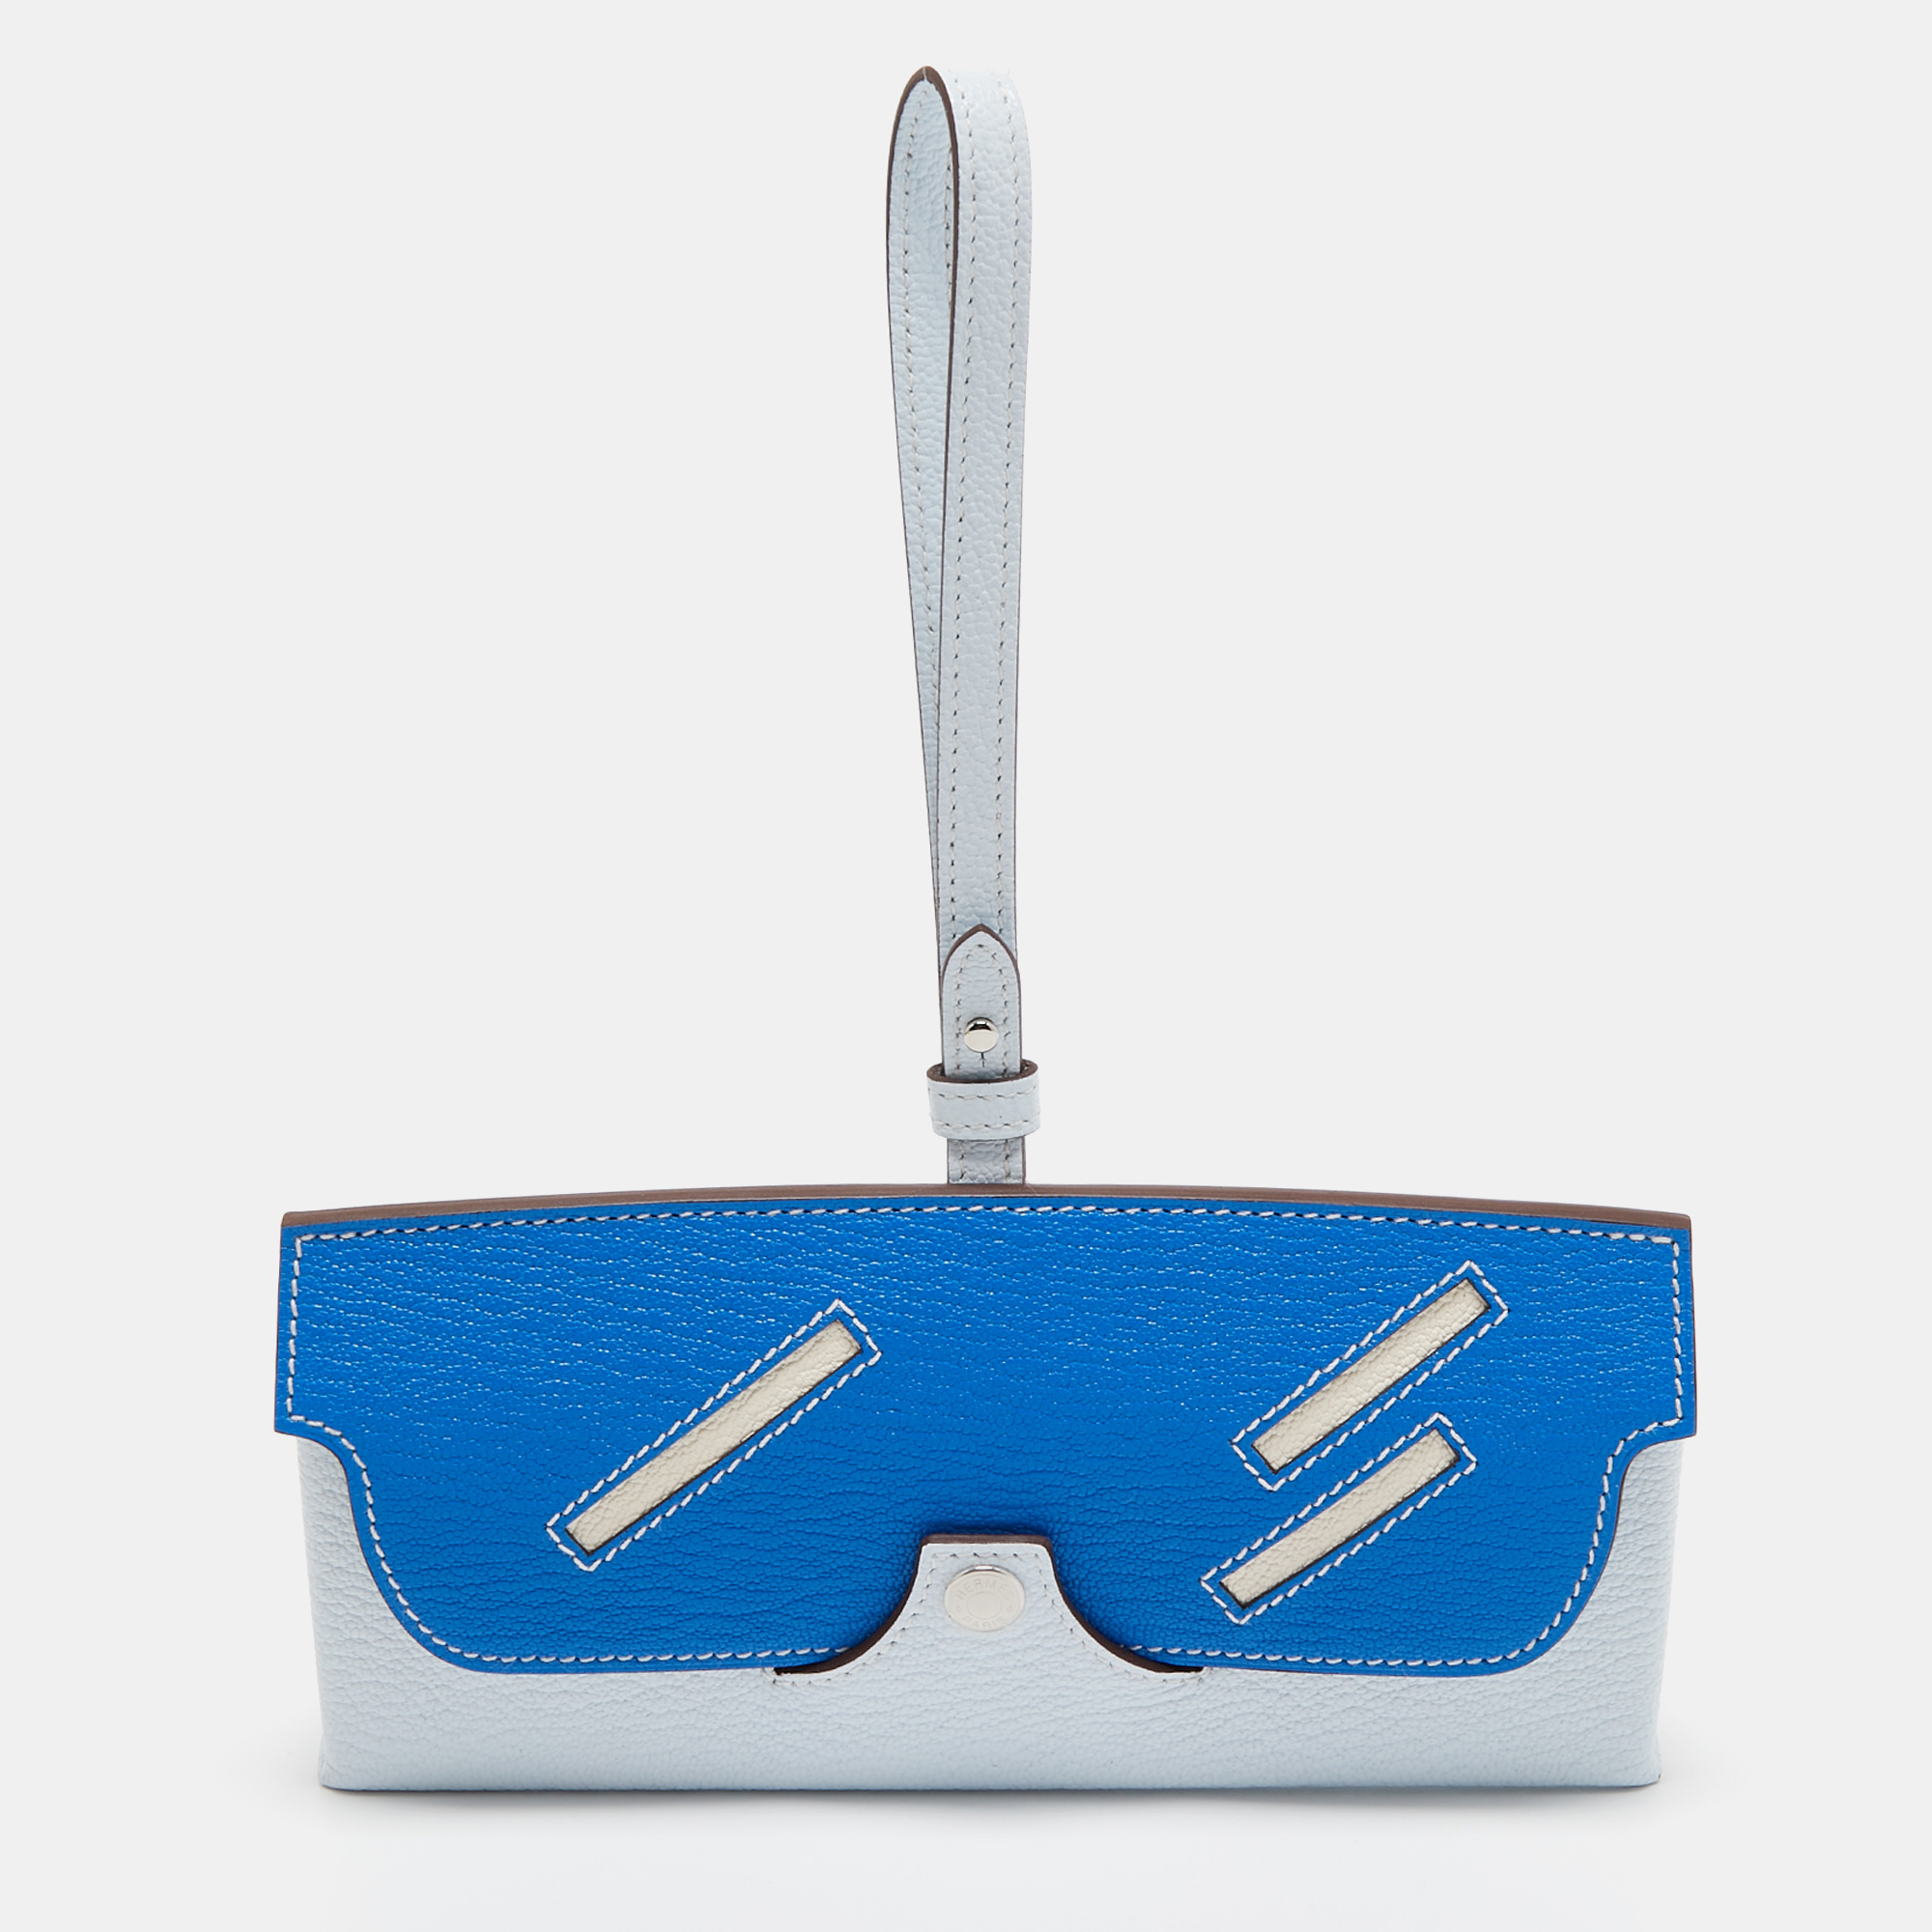 Hermes bleu brume/bleu hydra /quebracho /nauve sylvestre mysore in the loop wink sunglasses case